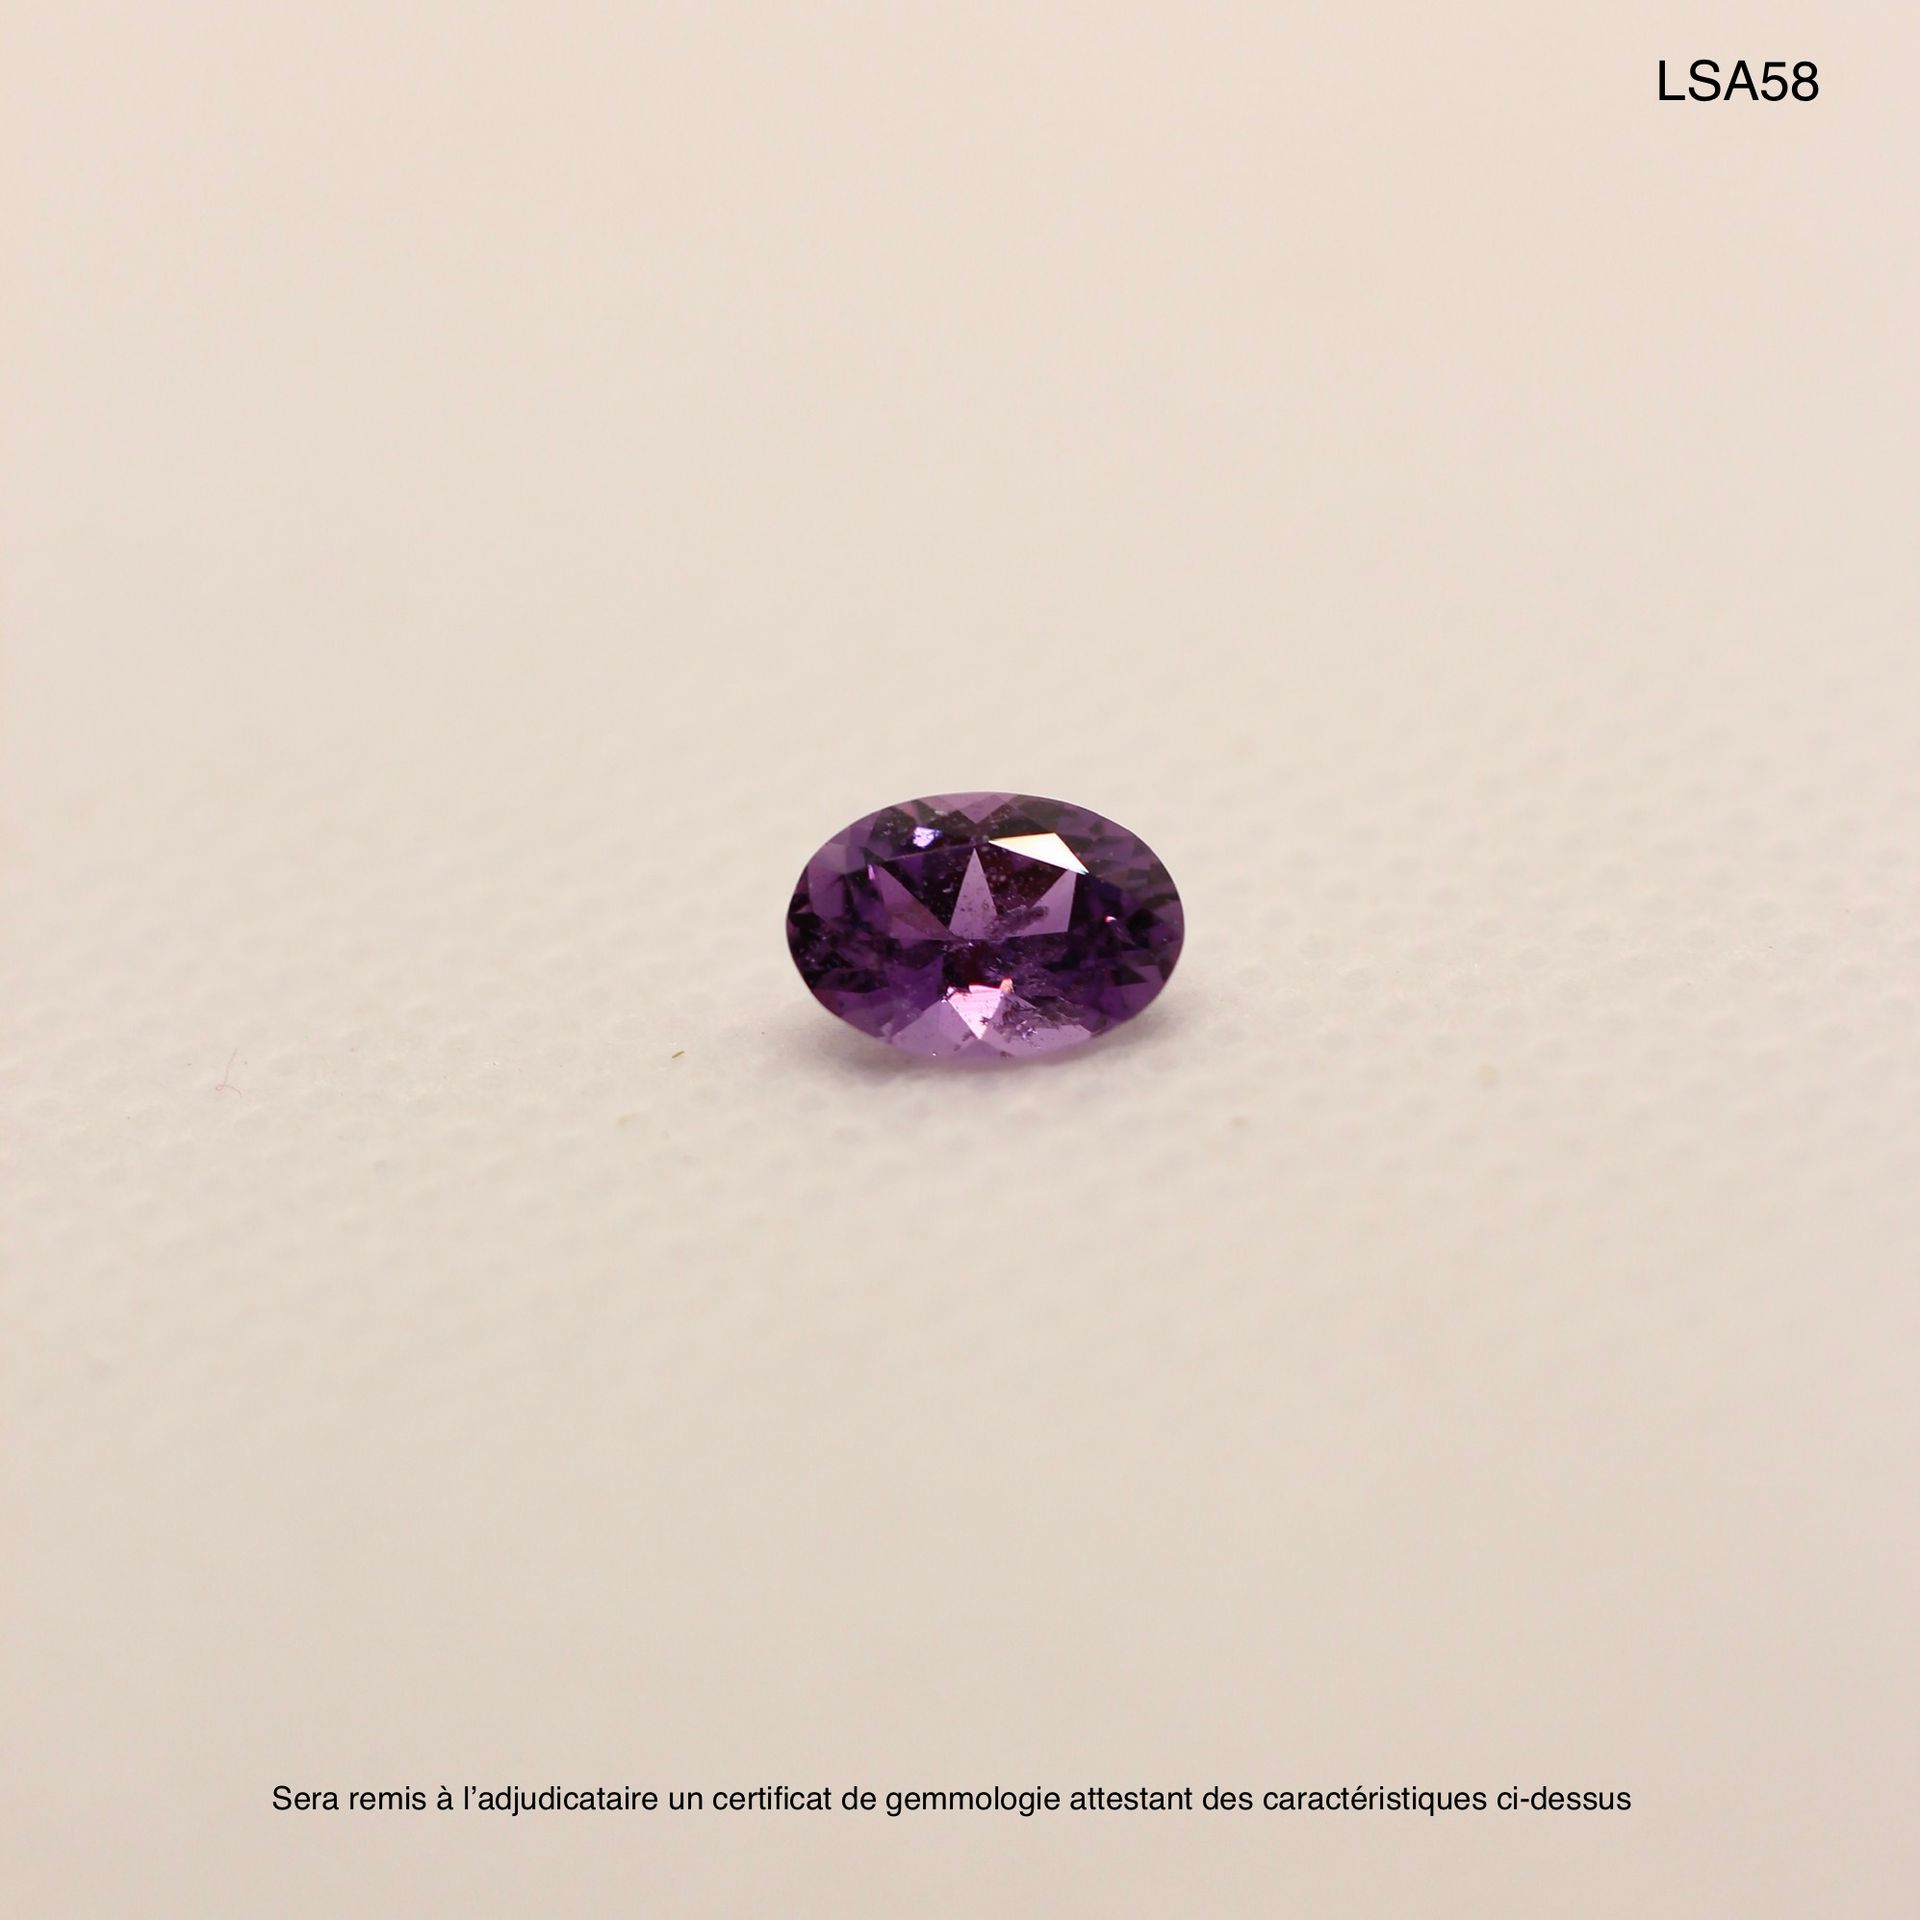 SAPHIRS TAILLÉS 拍品编号：LSA58

原产地: 马达加斯加

治疗: Ø

颜色：紫罗兰色

形状: 椭圆形

尺寸：7.2mm x 5.1m&hellip;